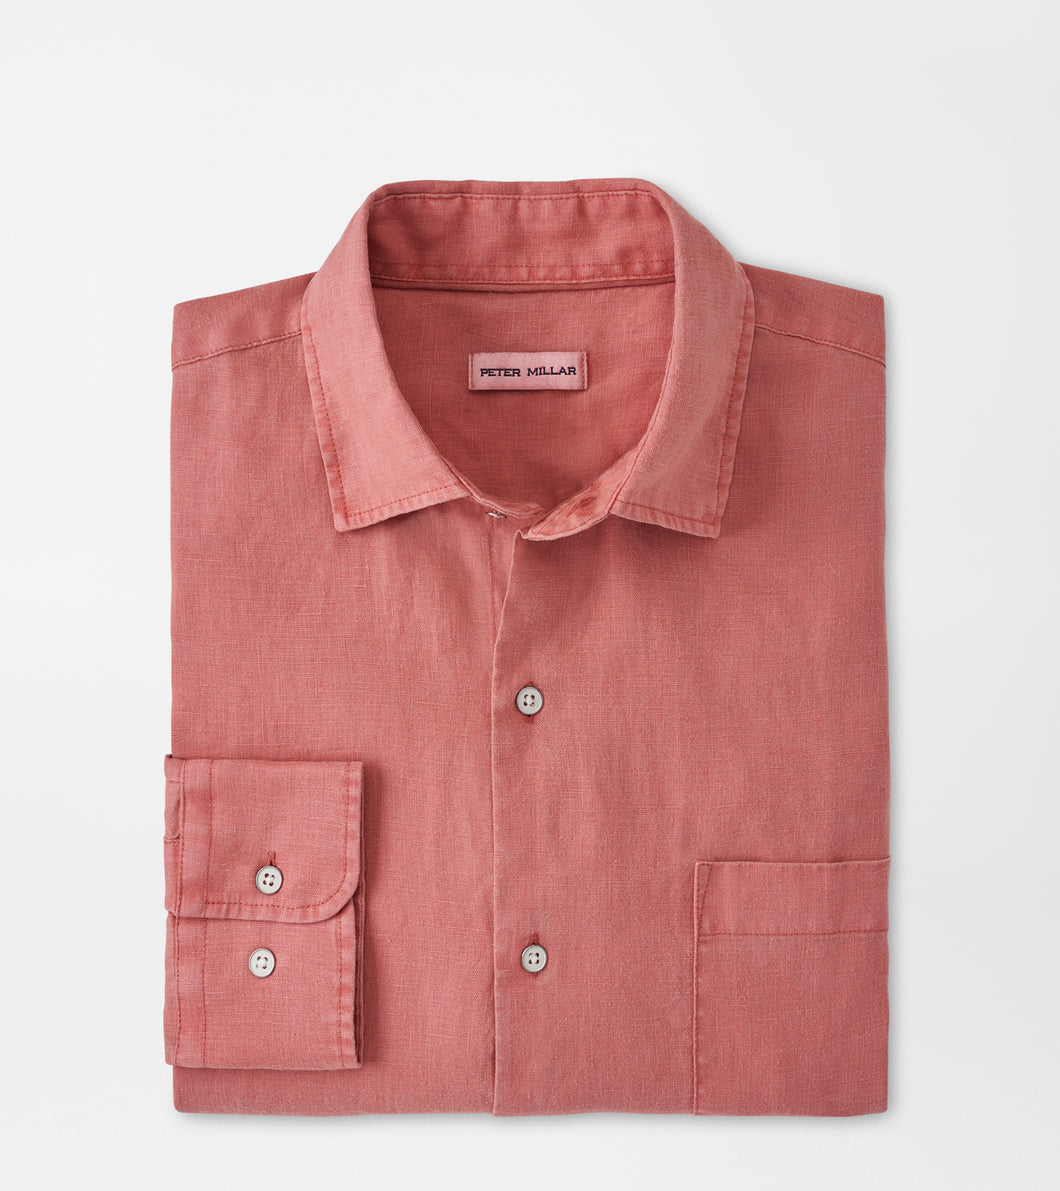 Peter Millar Coastal Garment-Dyed Linen Sport Shirt in Clay Rose